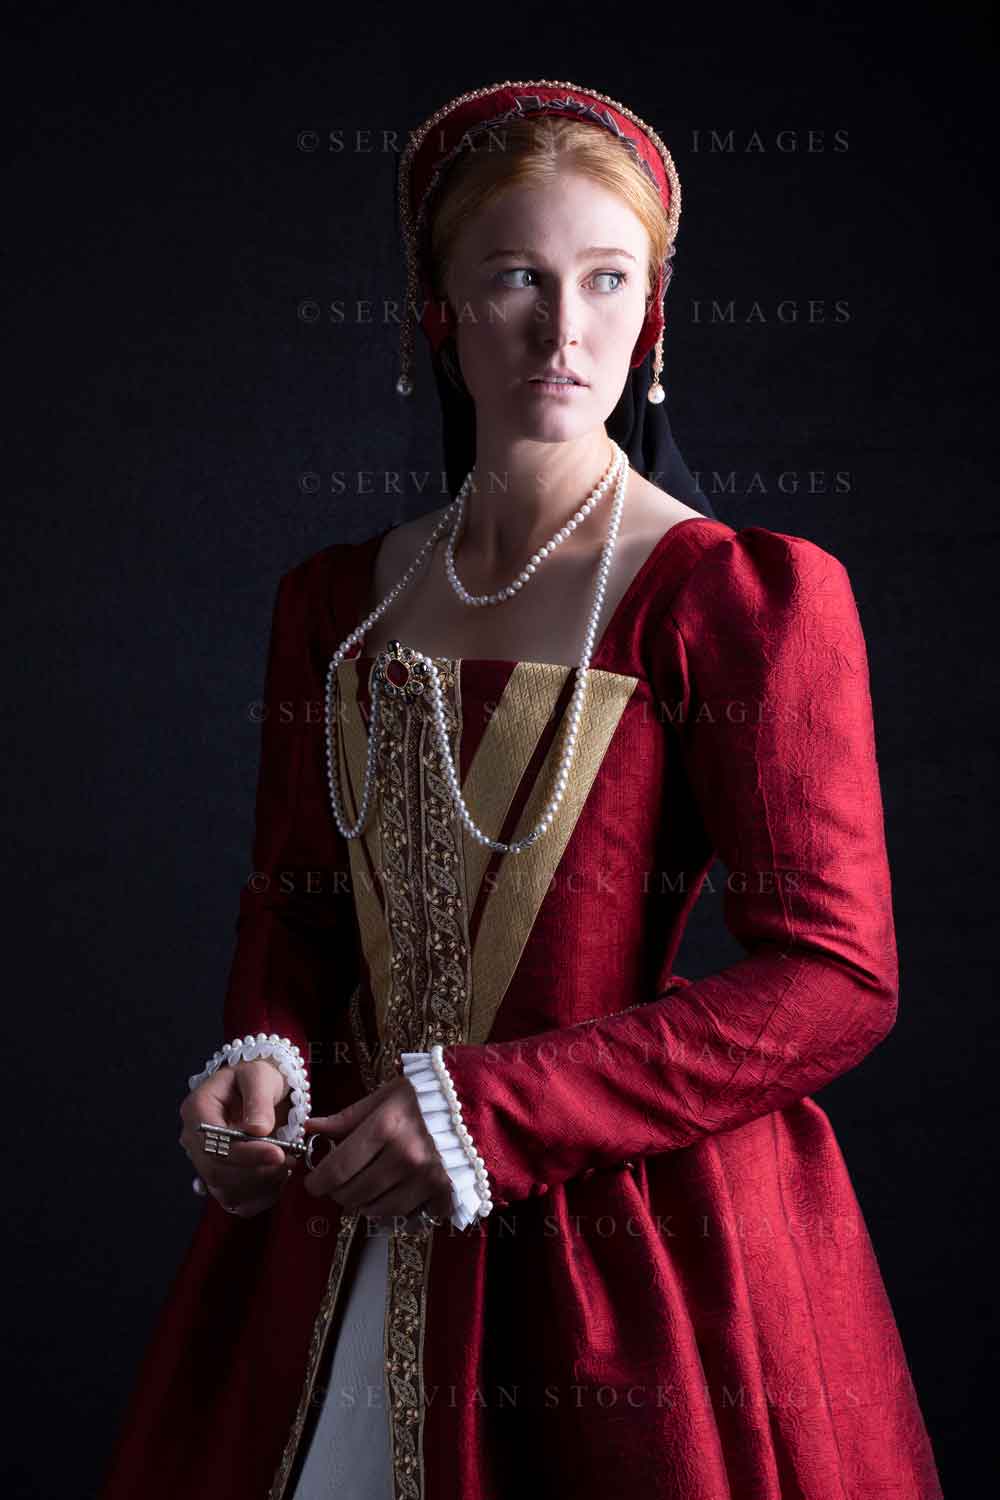 Tudor woman in an ornate red dress  (Lauren 0223)